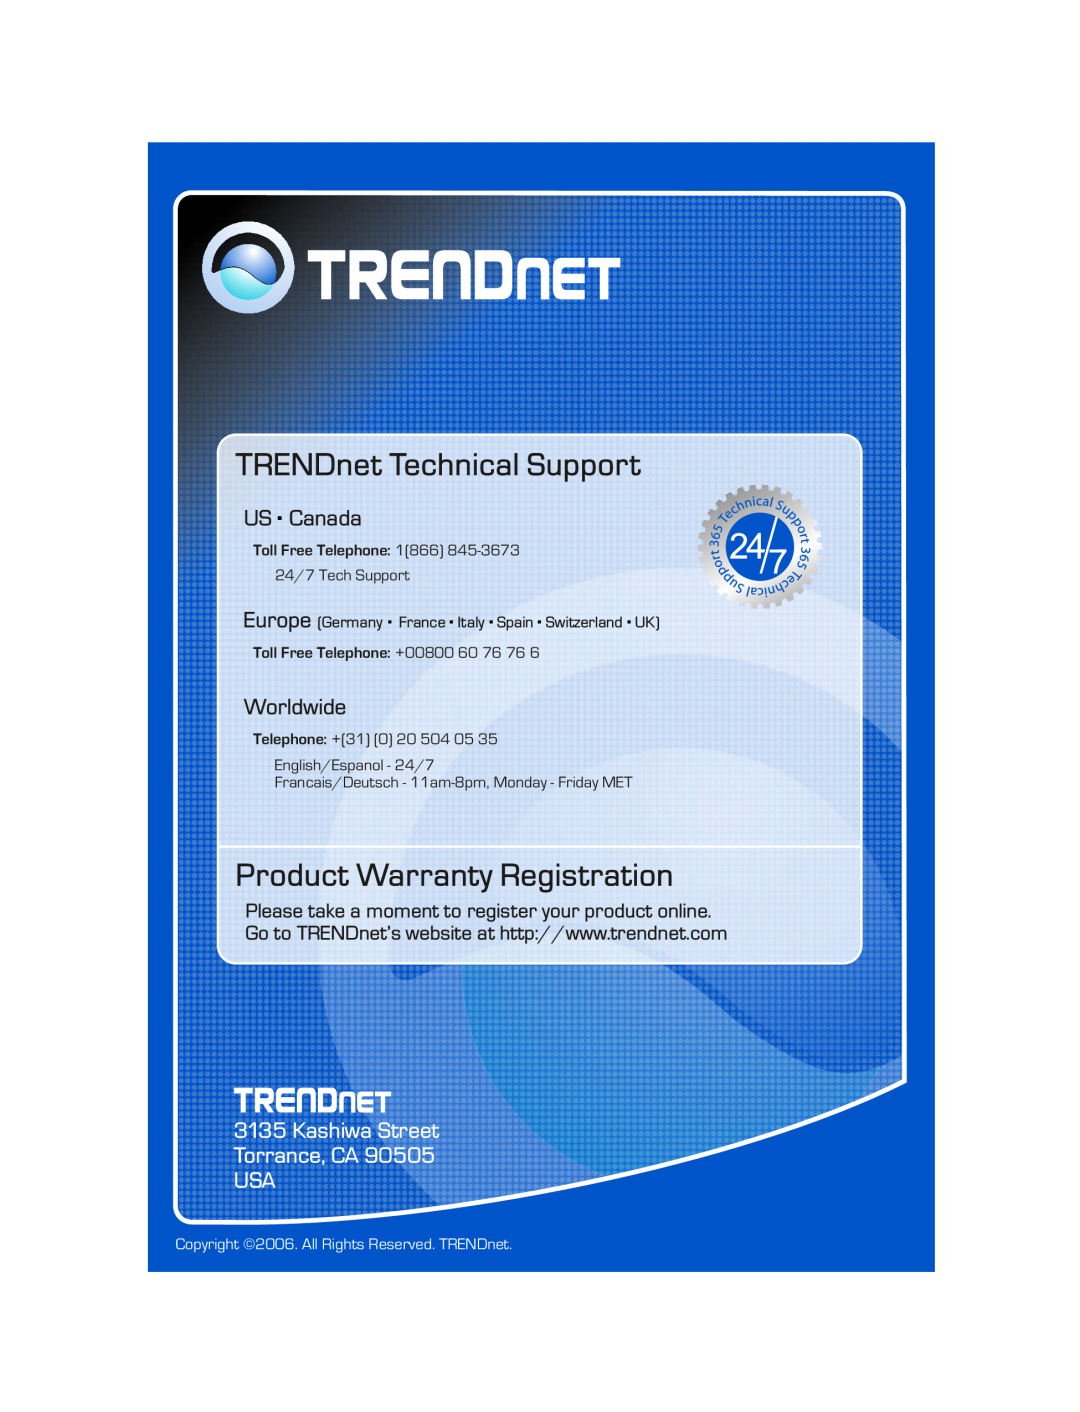 TRENDnet TBW-102UB TRENDnet Technical Support, Product Warranty Registration, US . Canada, Worldwide, 24/7 Tech Support 